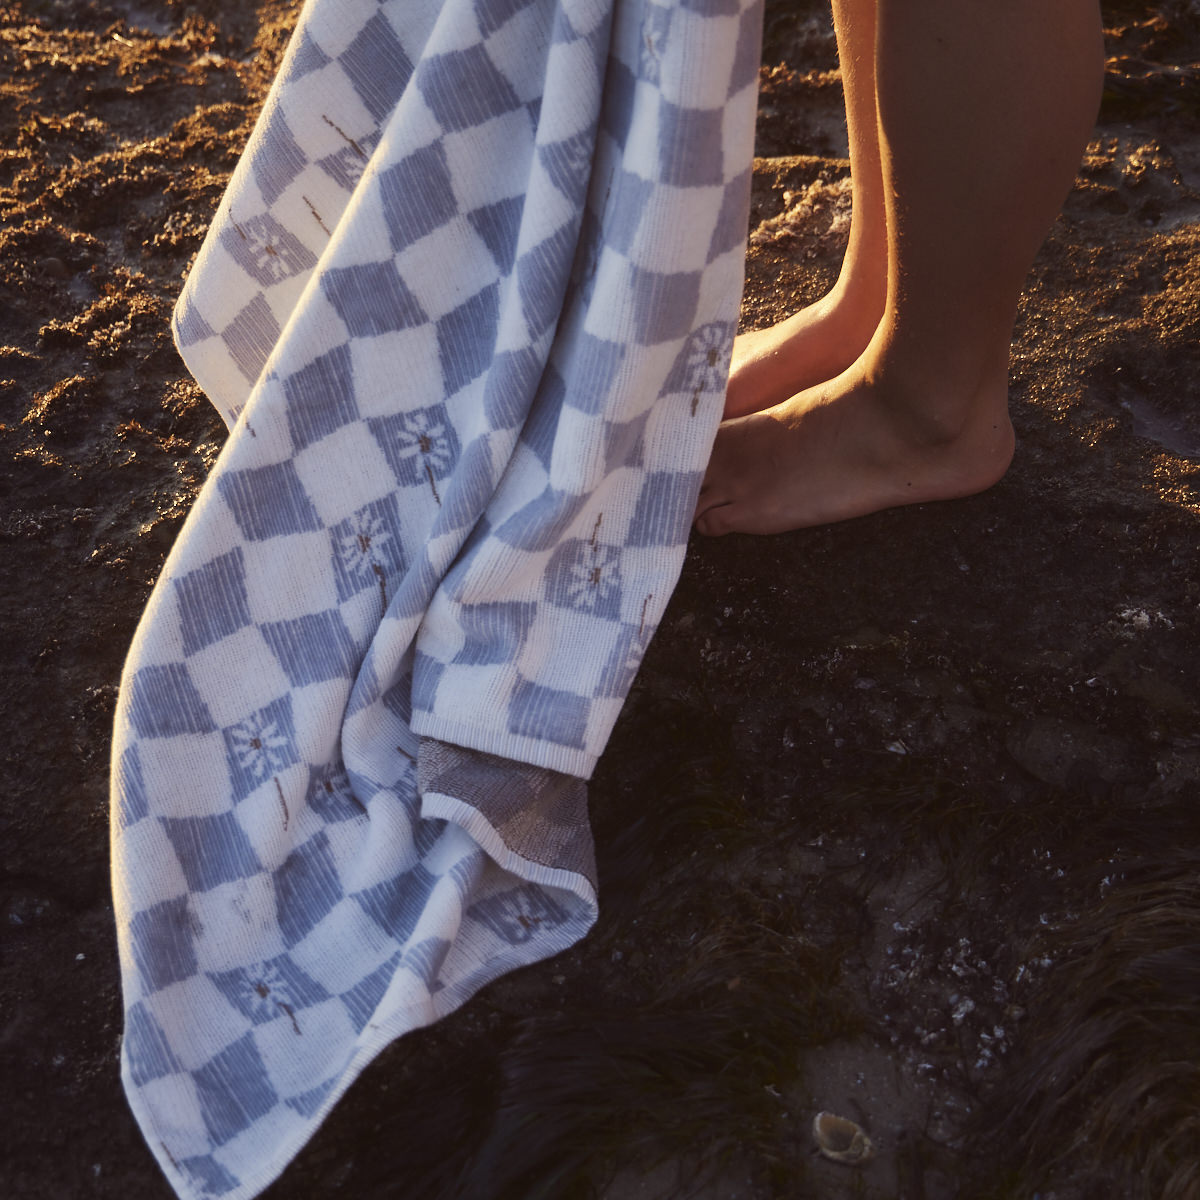 LOUIS VUITTON Damier Pattern Beach Towel Blanket Cotton Brown